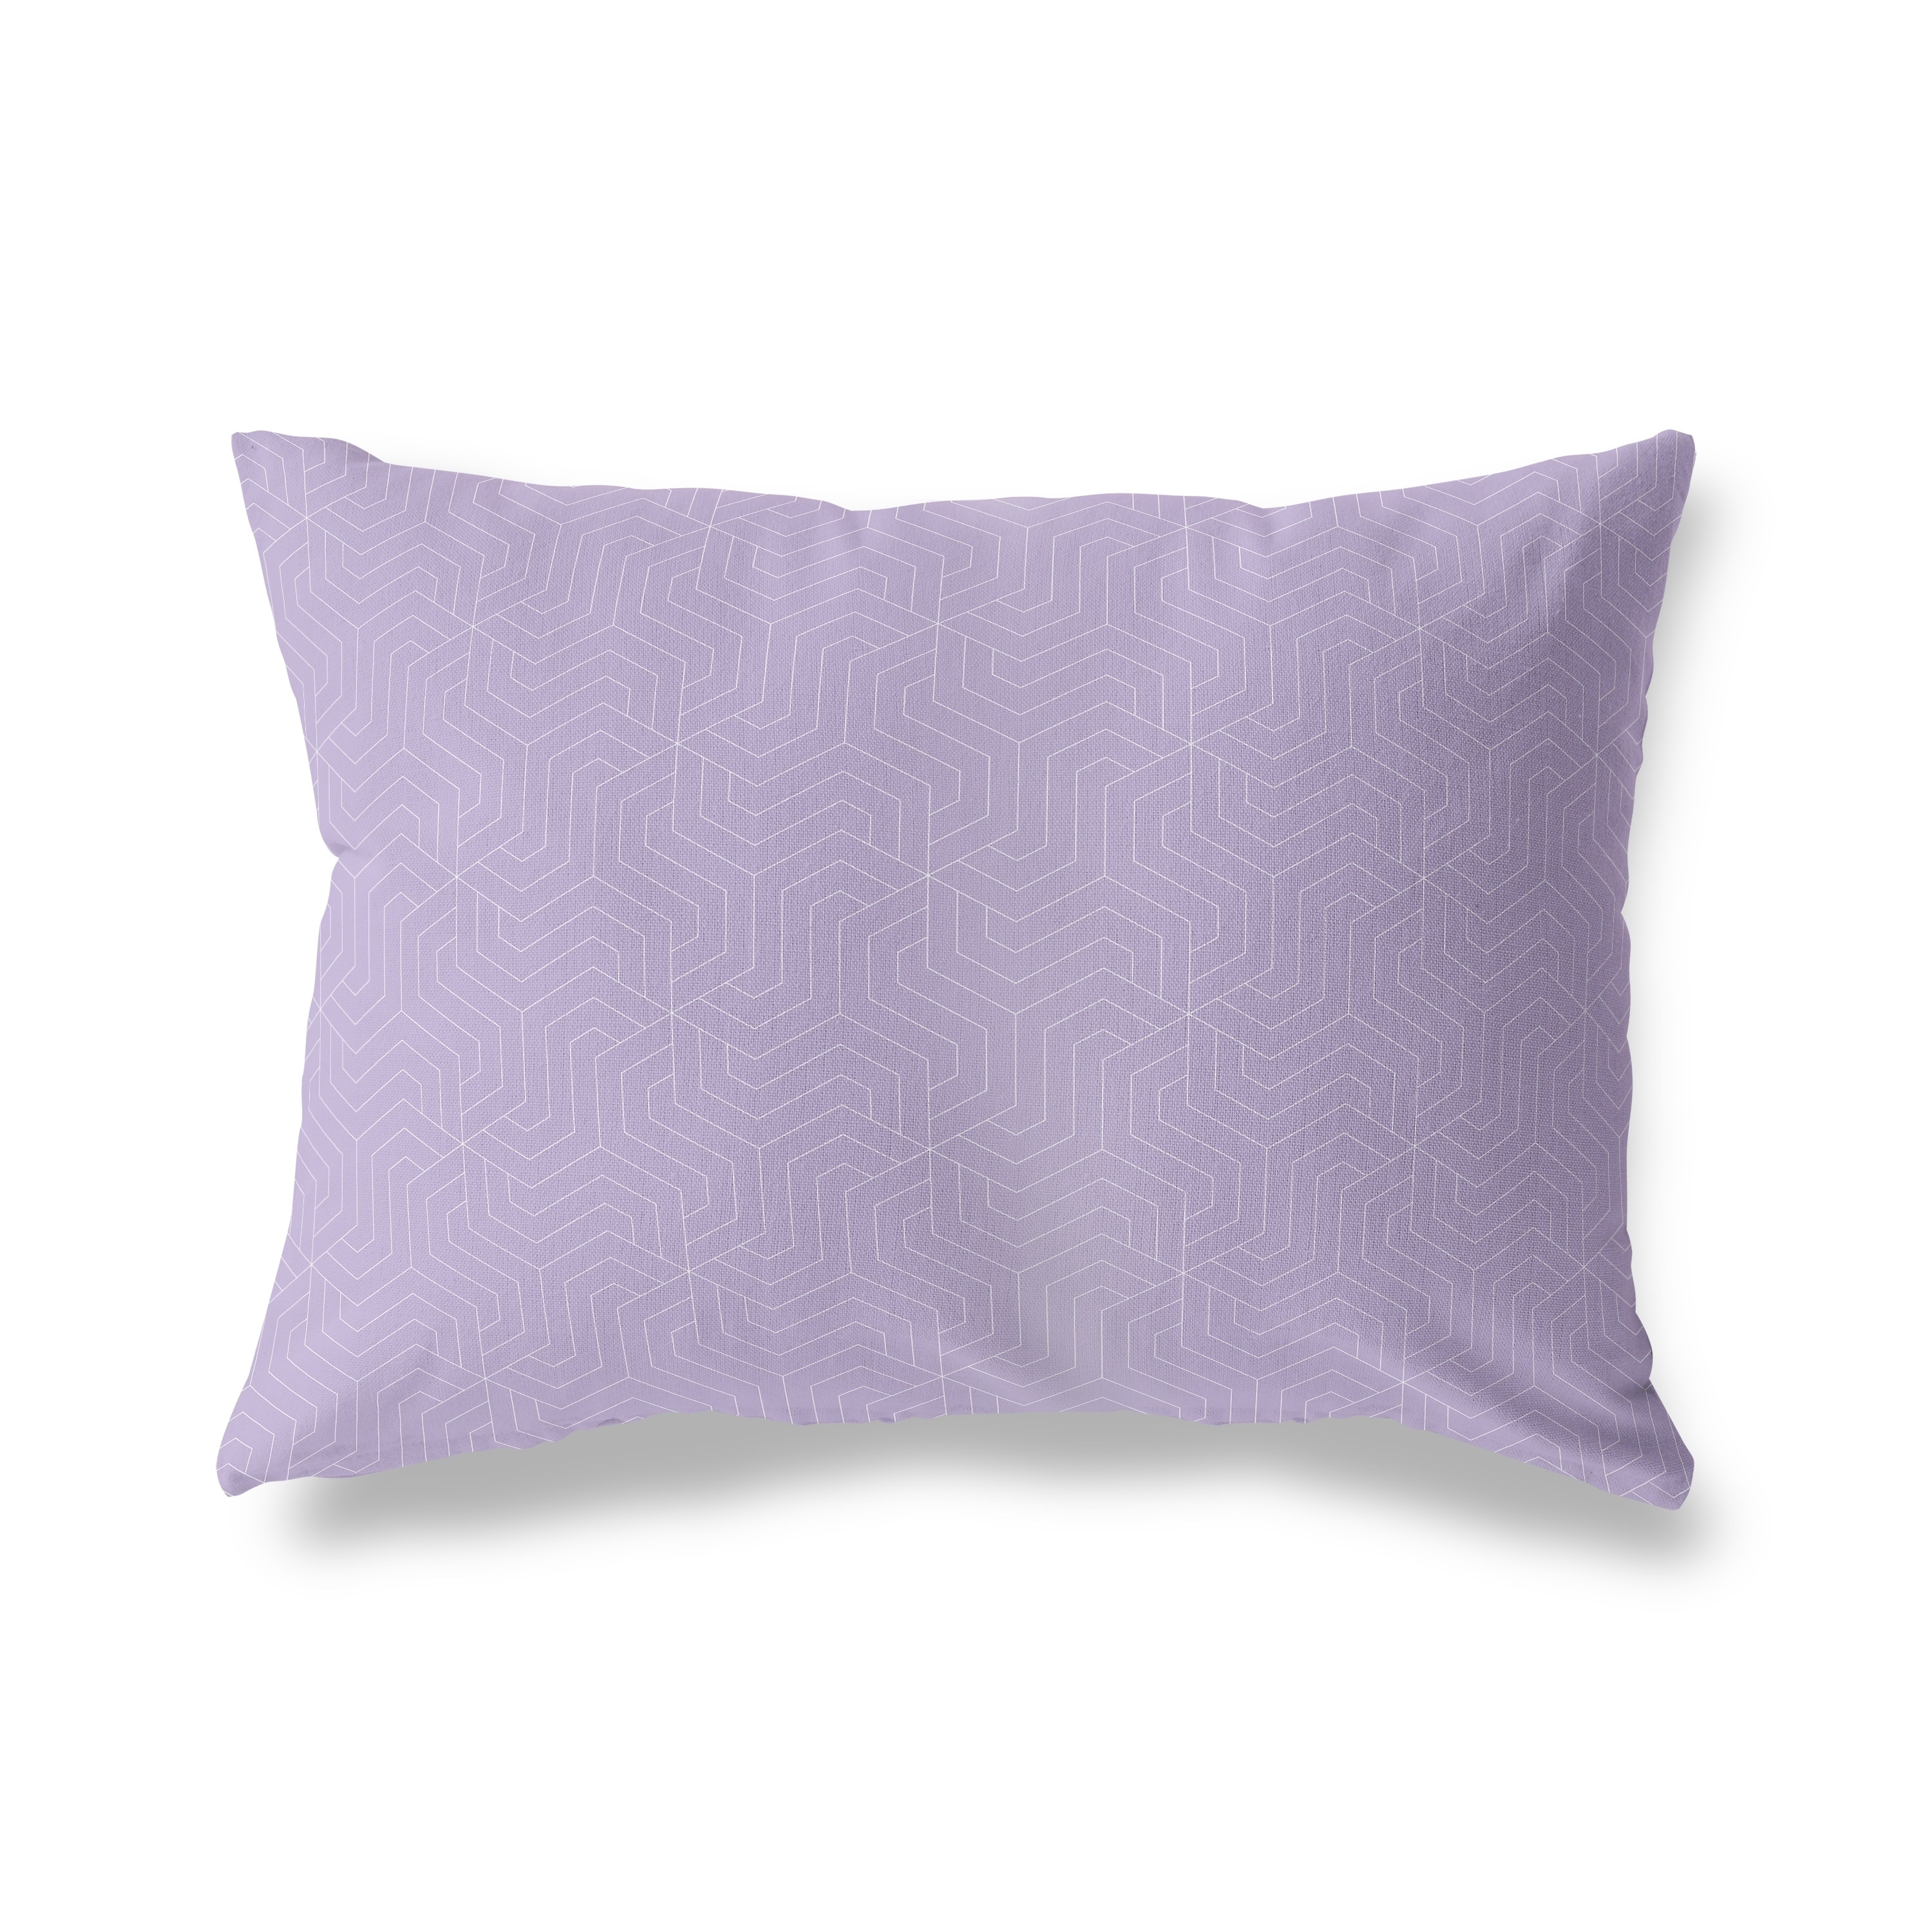 ZEUS PURPLE Lumbar Pillow By Kava Designs - Bed Bath